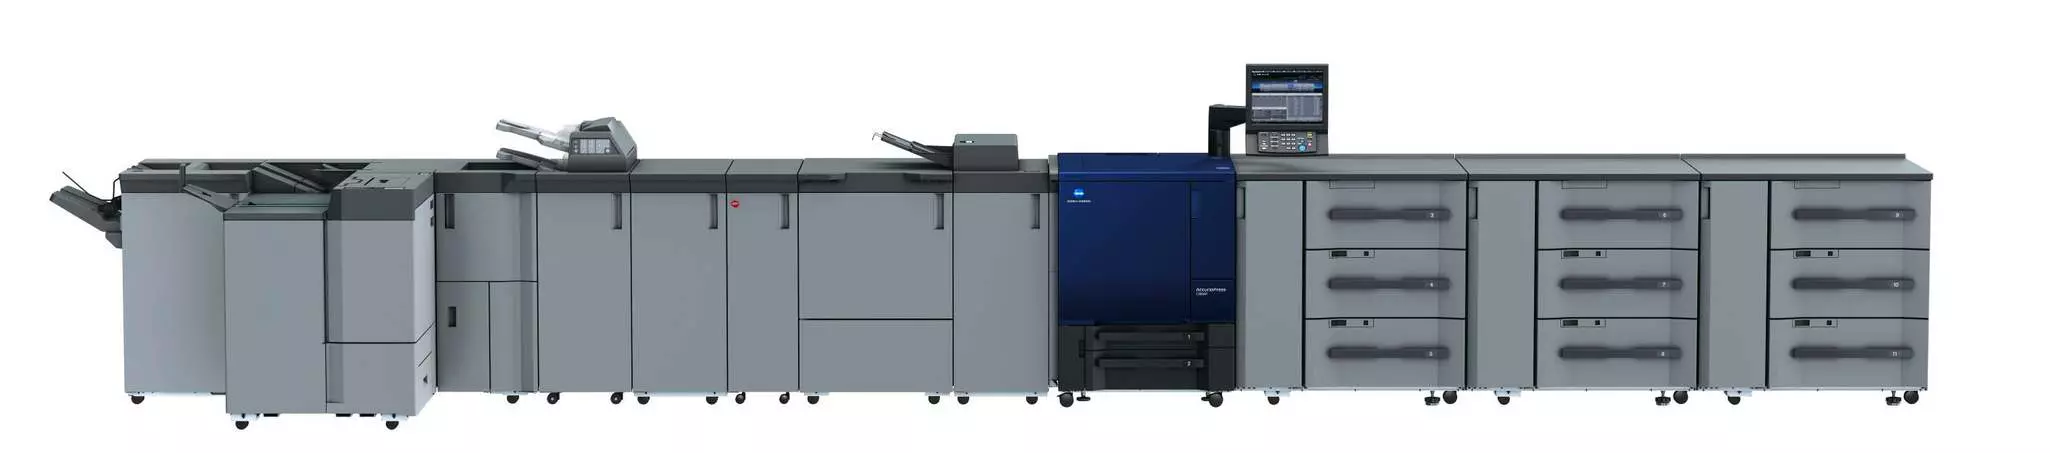 Konica Minolta AccurioPress c3080p professionel printer